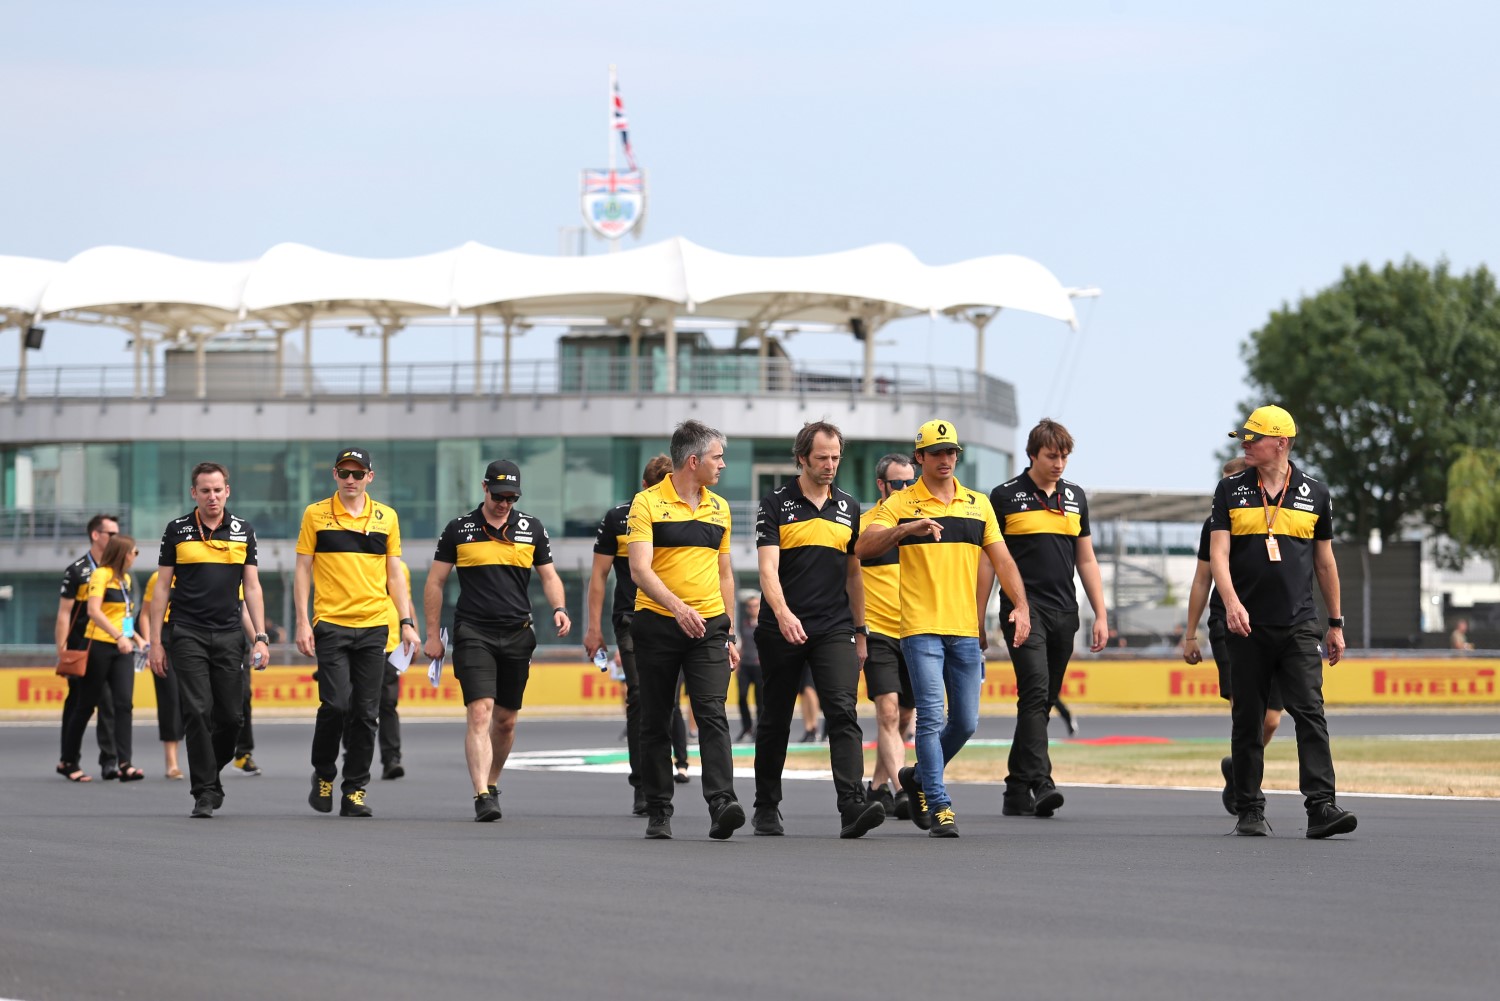 Renault team walk the wash board circuit